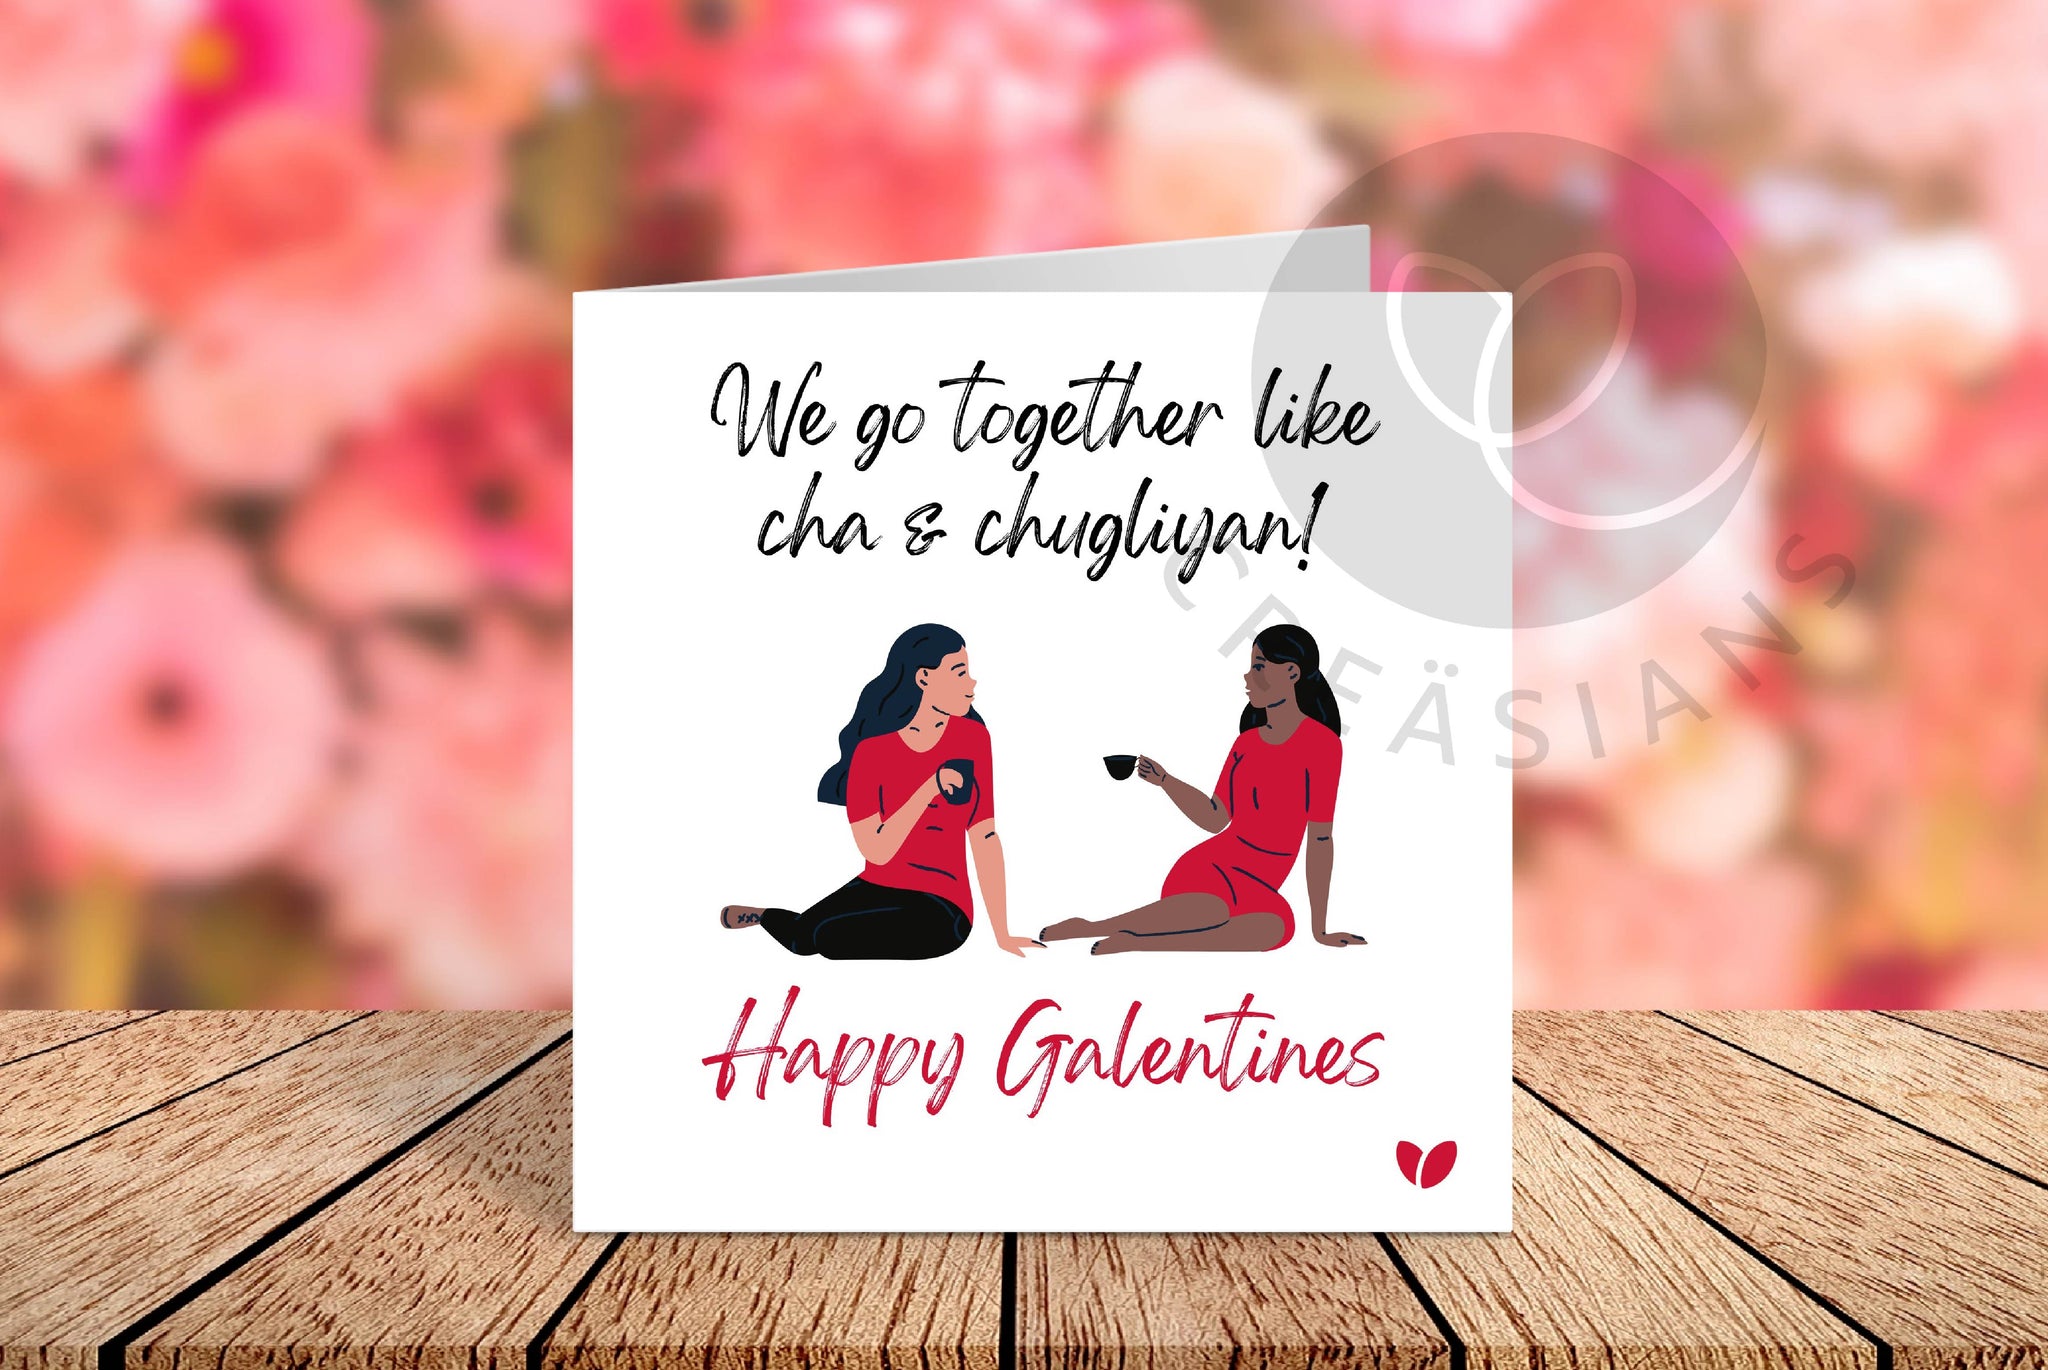 Cha and Chugliyan Galentines greeting card